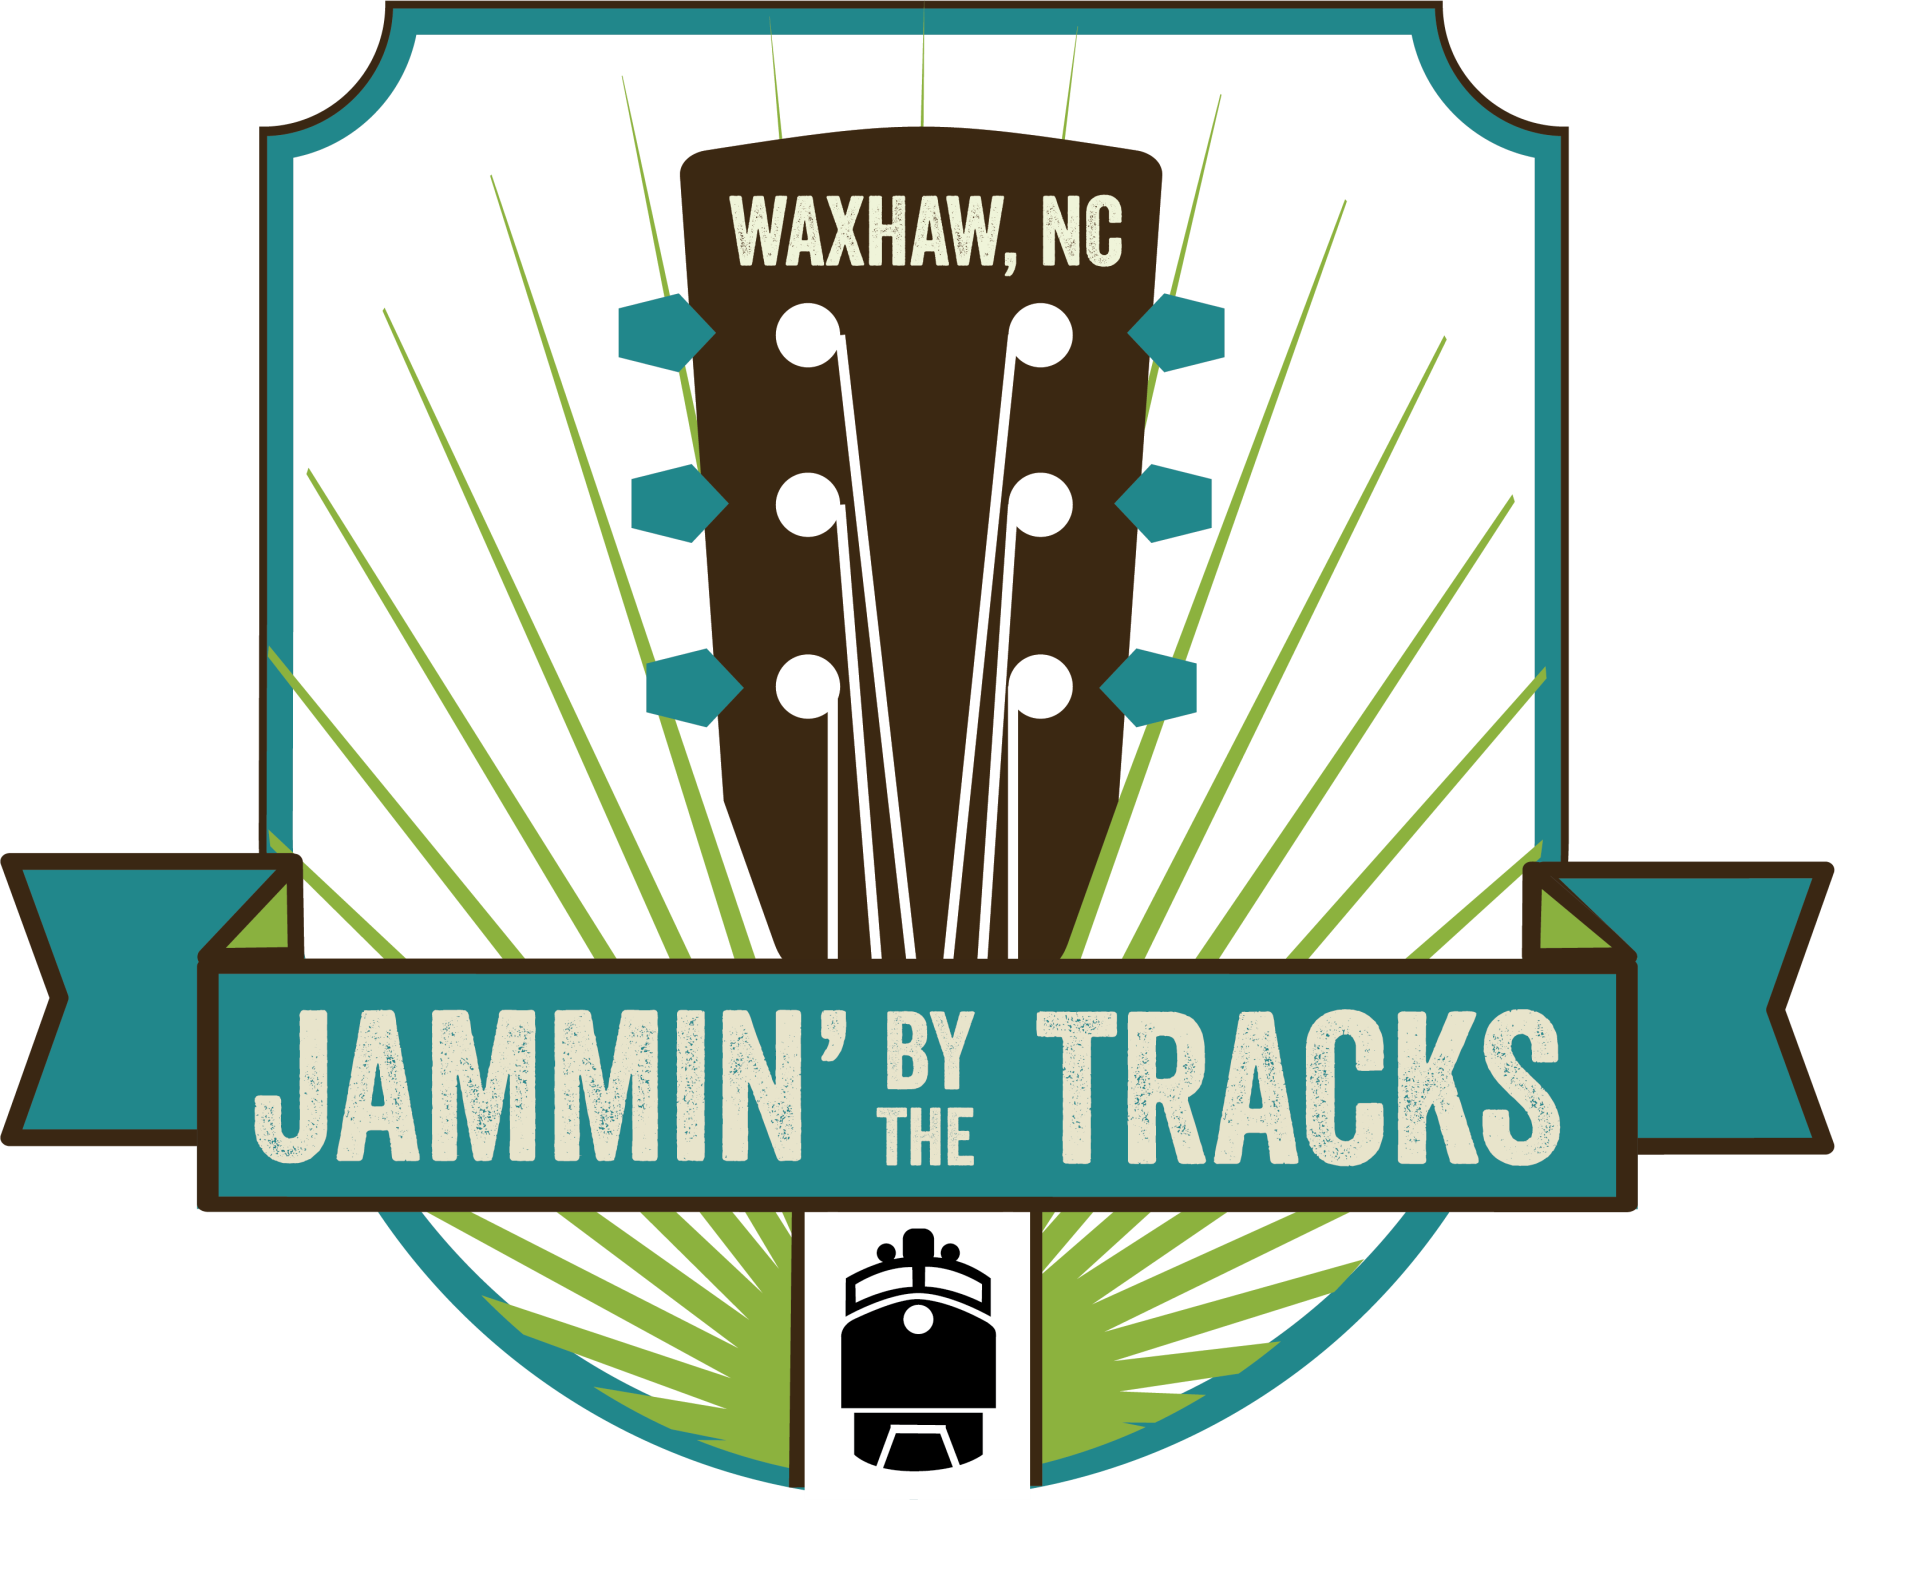 Jammin by the Tracks logo